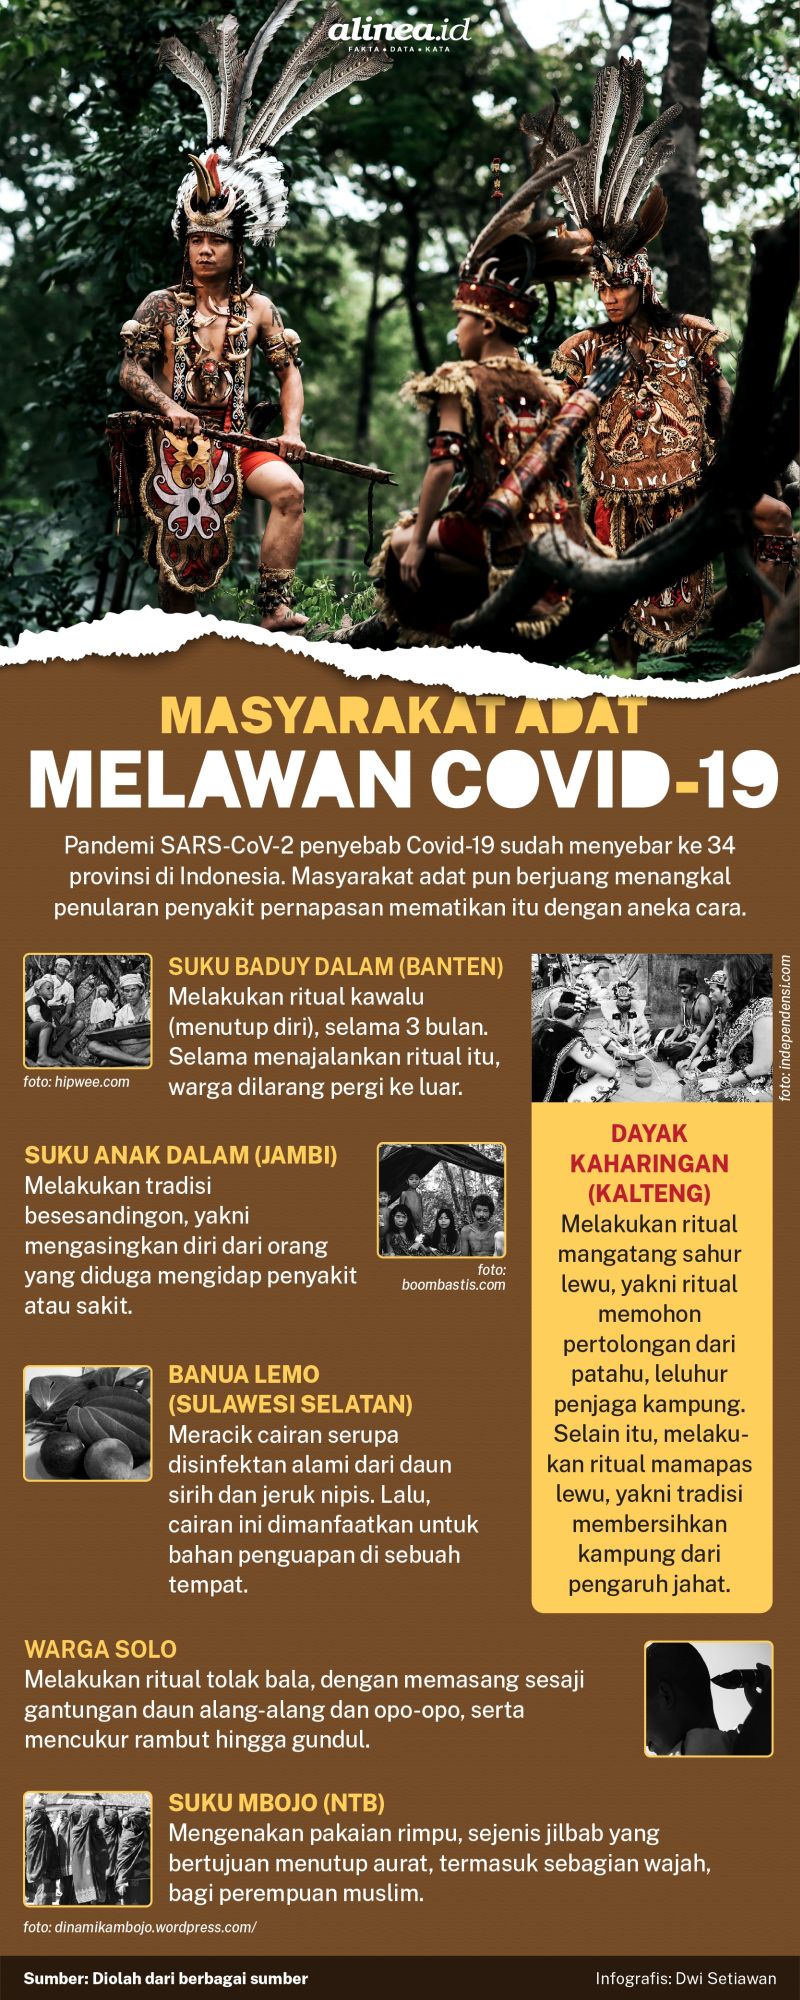 Infografik masyarakat adat. Alinea.id/Dwi Setiawan.